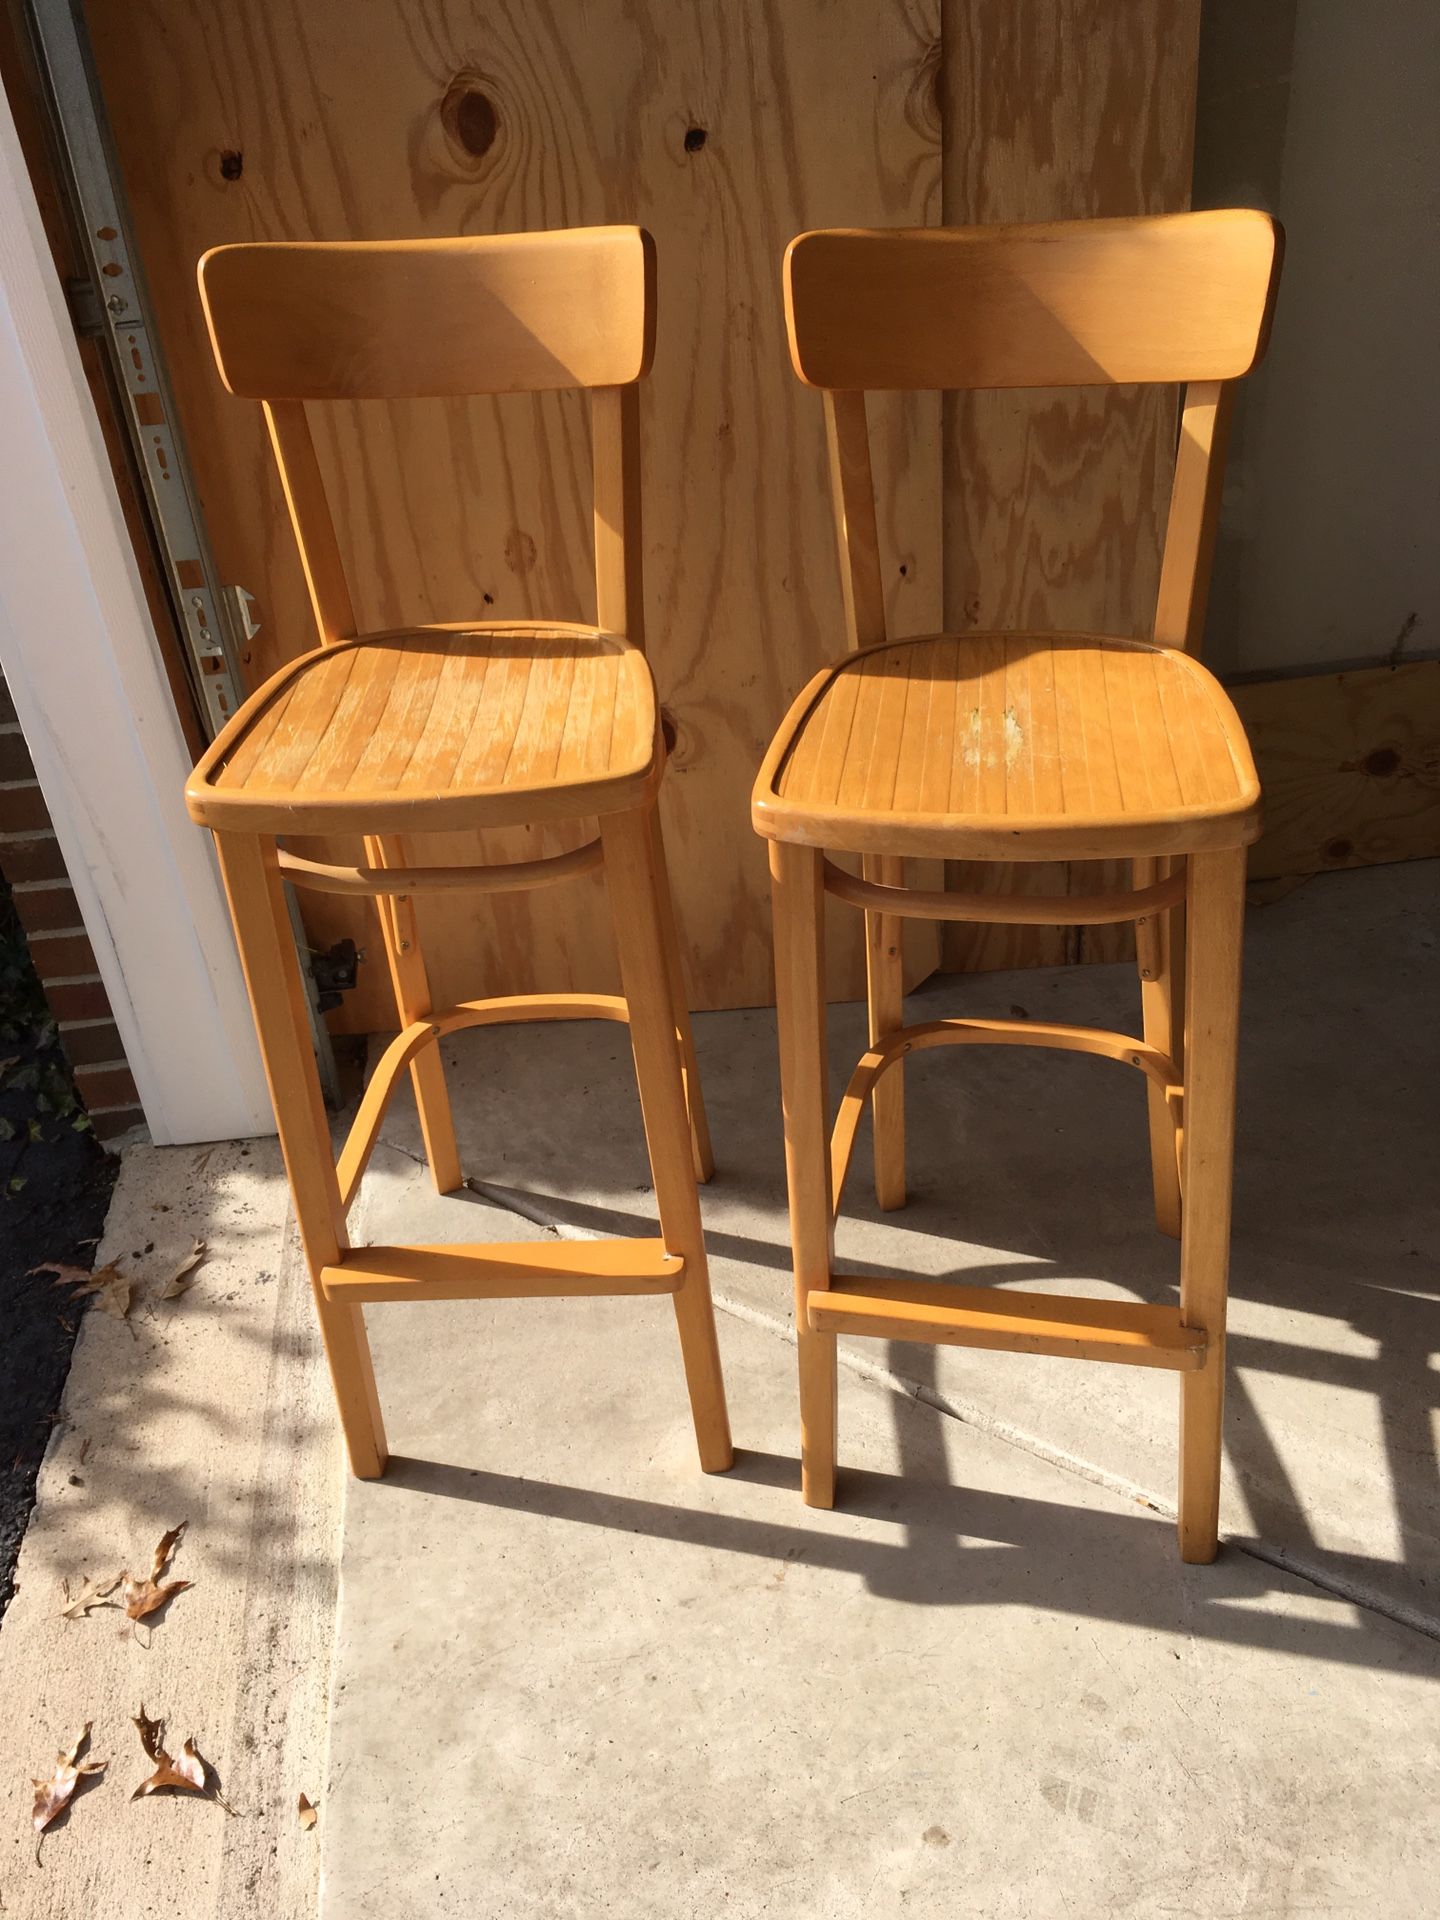 Pair of wooden bar stools